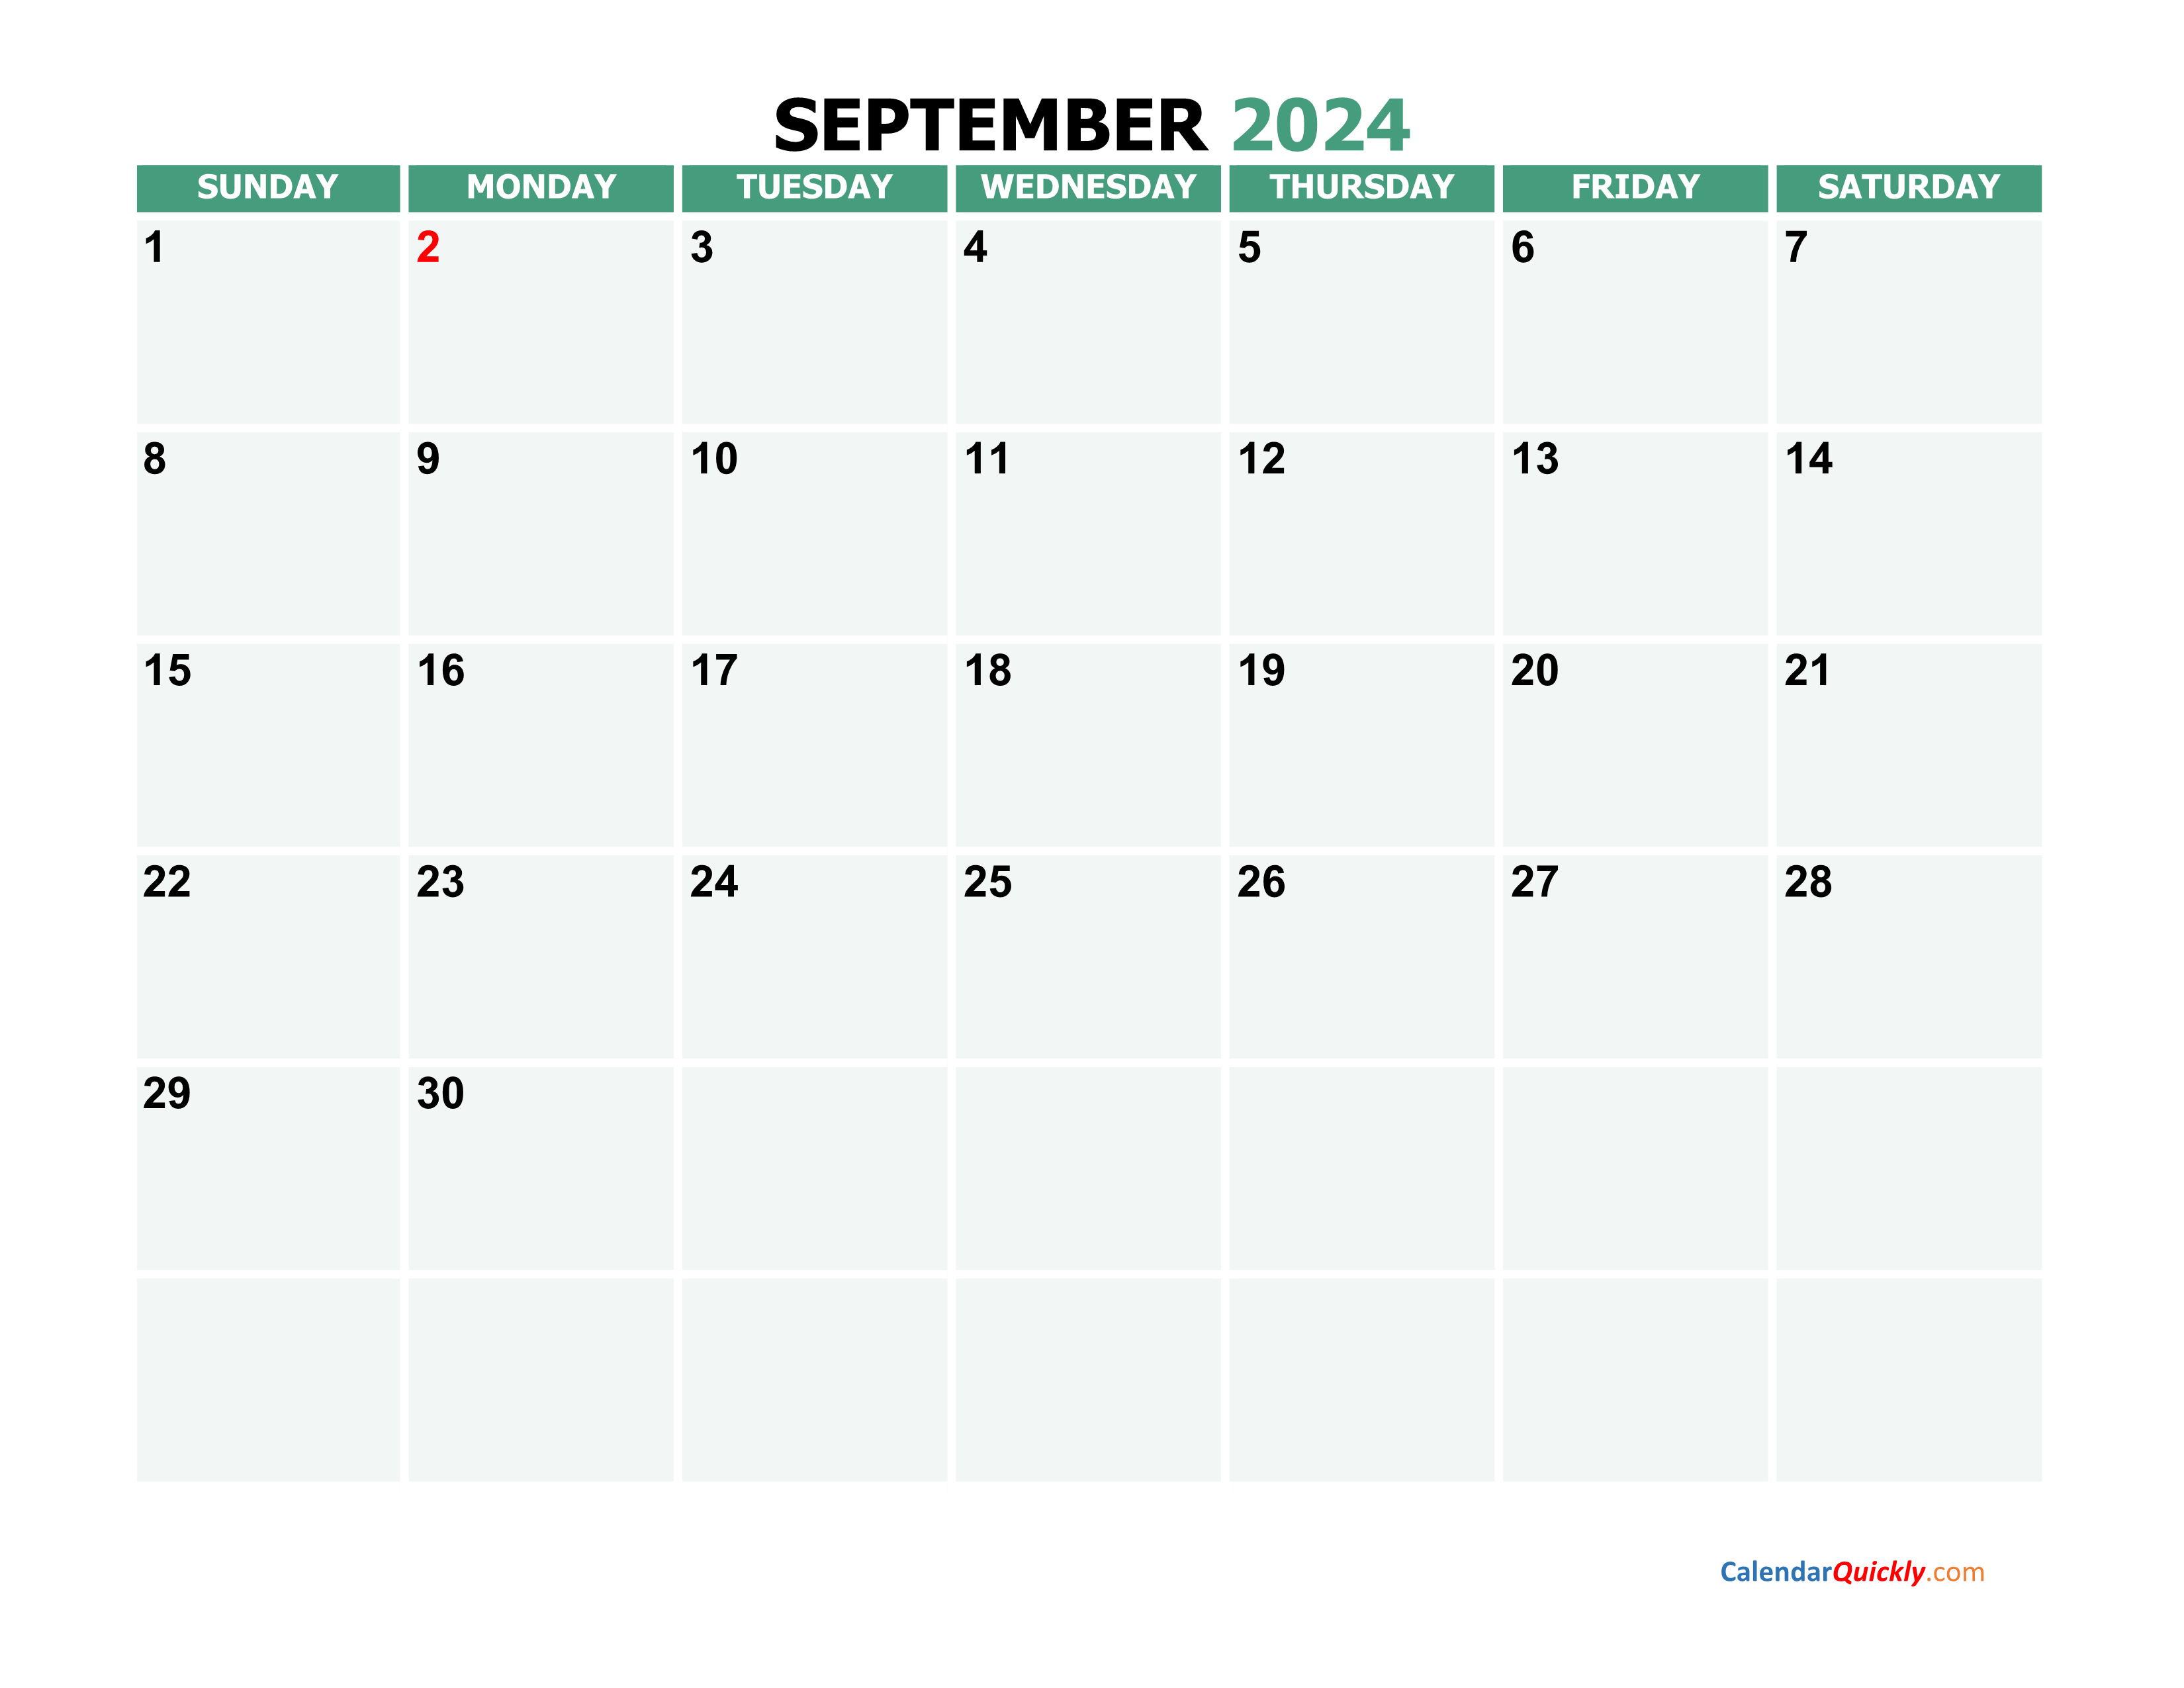 Calendar September 2024 Printable Free Calendar 2024 All Holidays - Free Printable 2024 Calendar Augustt September October